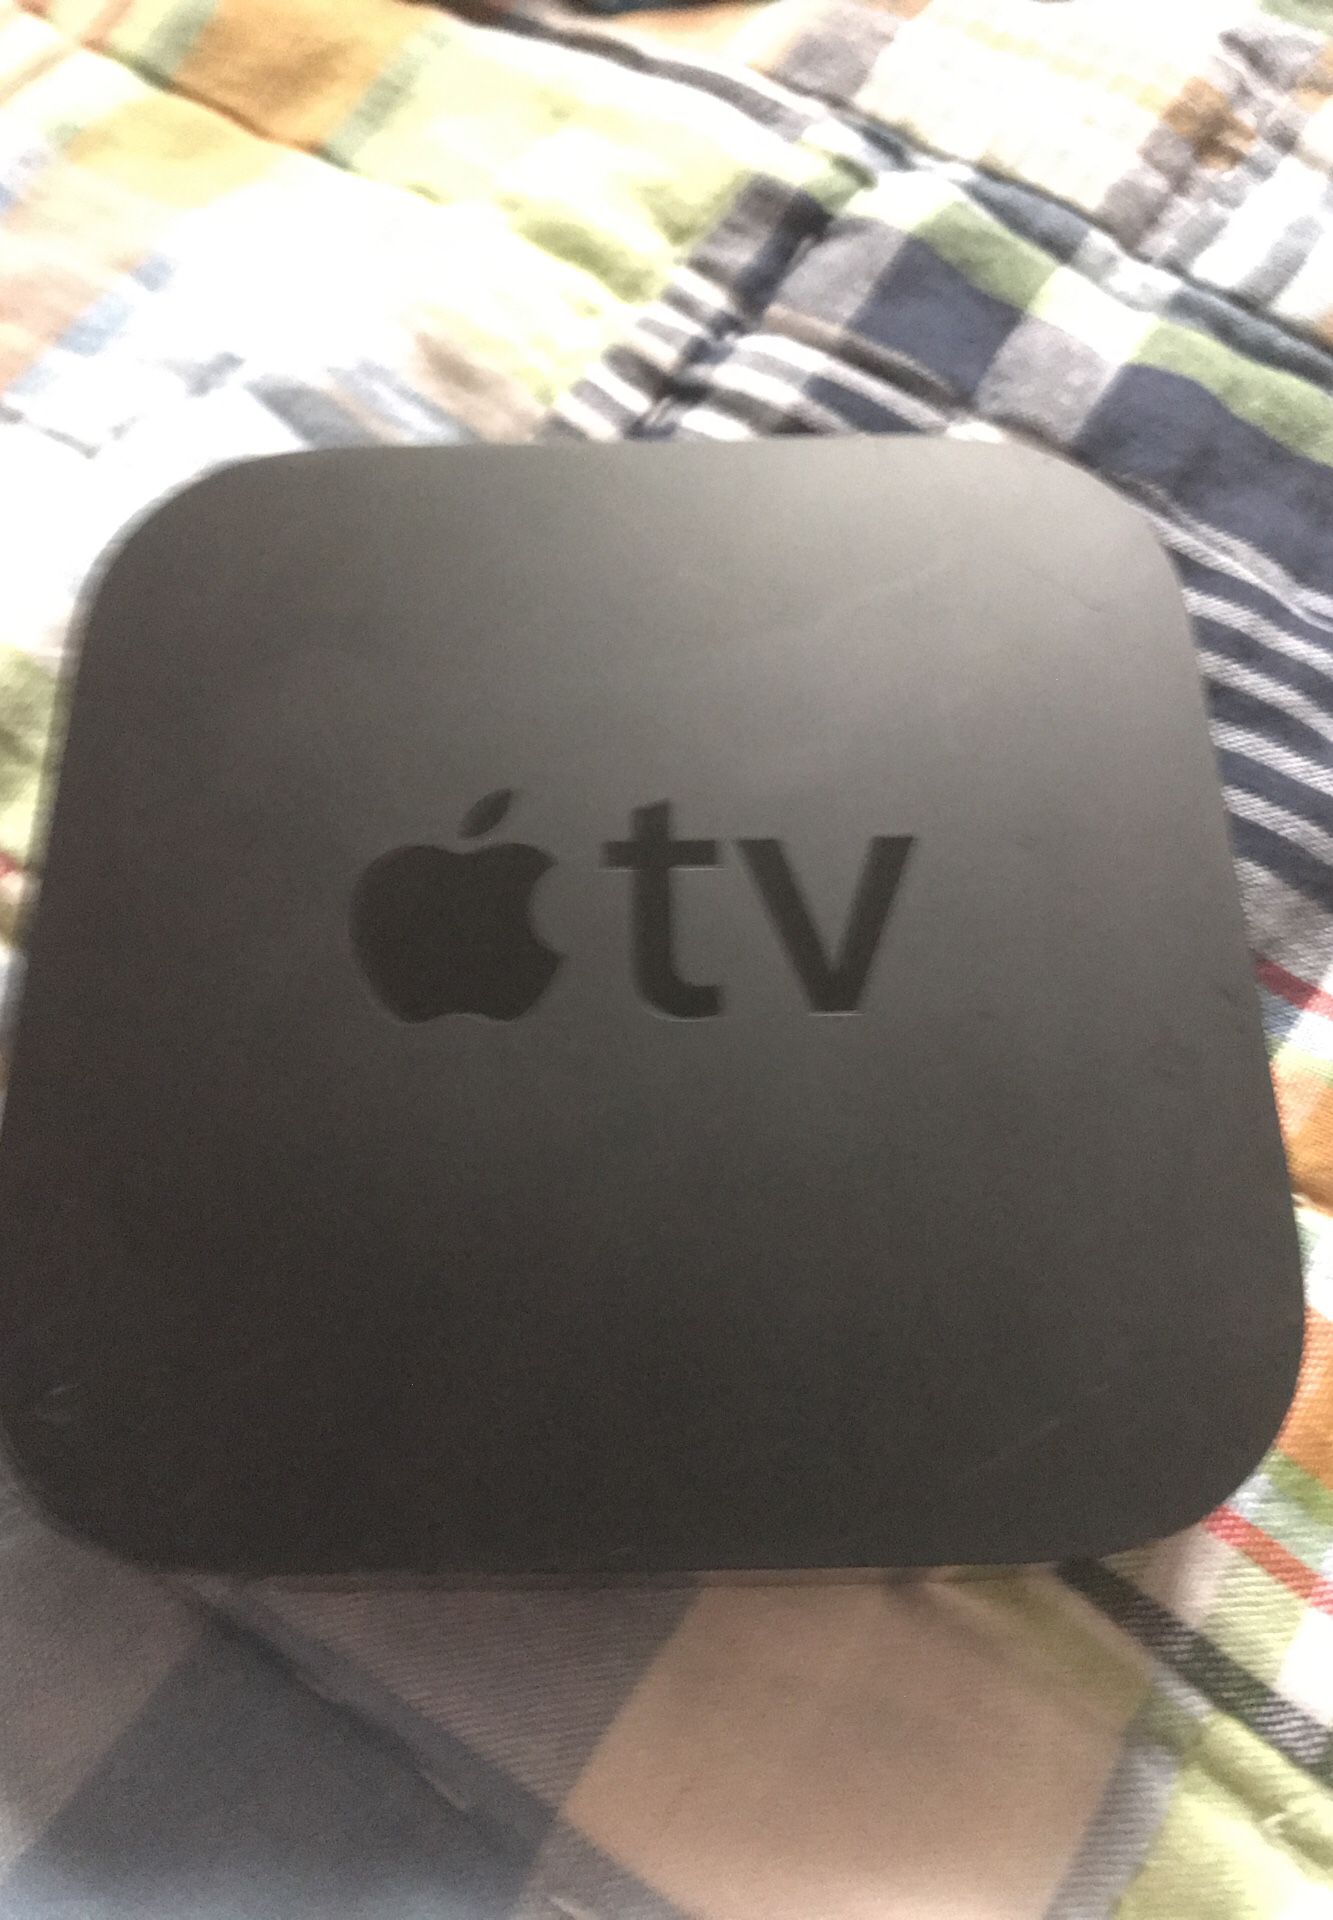 Apple TV Taking offers